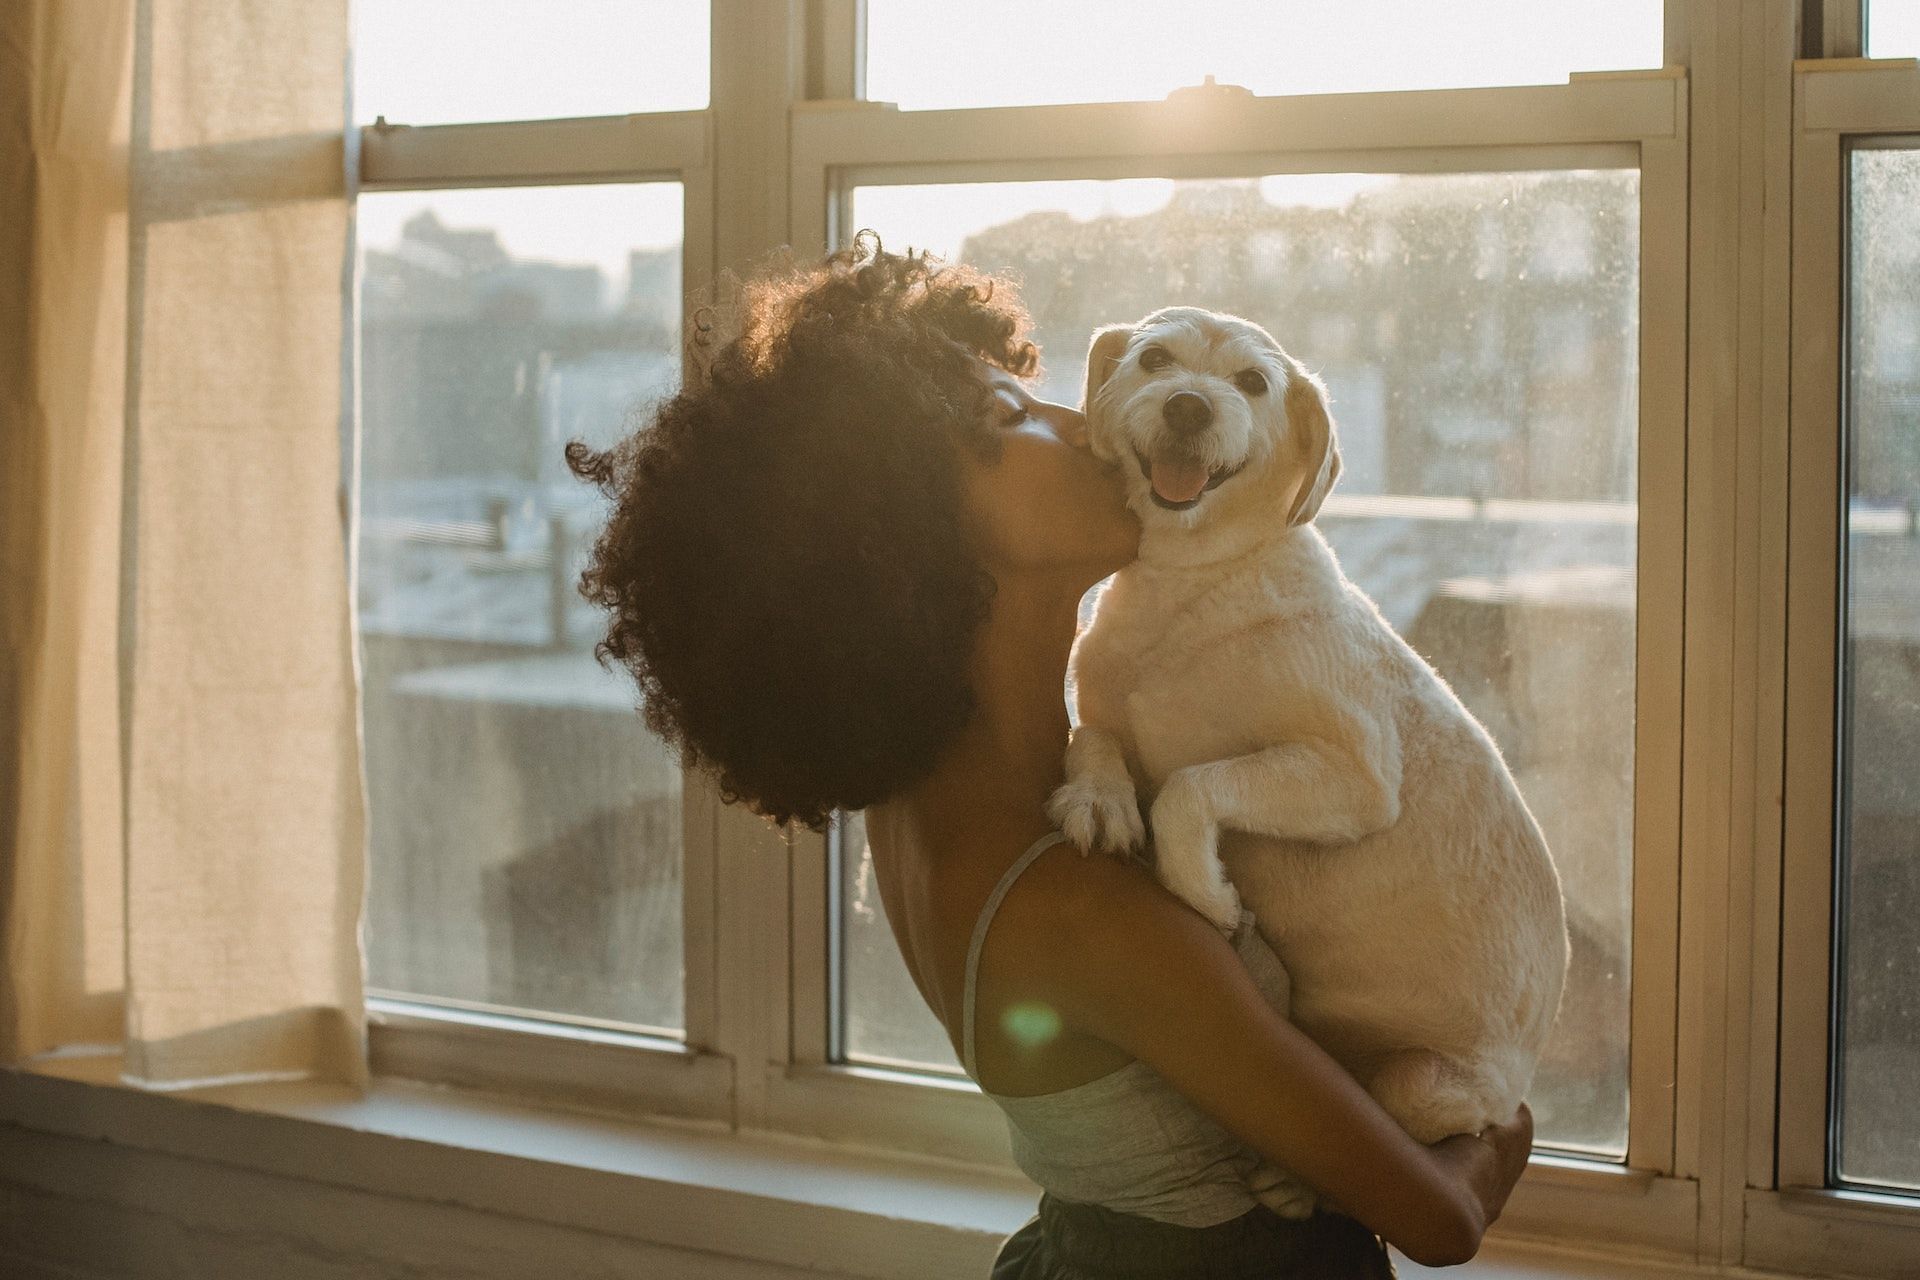 Having a dog reduces anxiety and stress. (Photo via Pexels/Samson Katt)